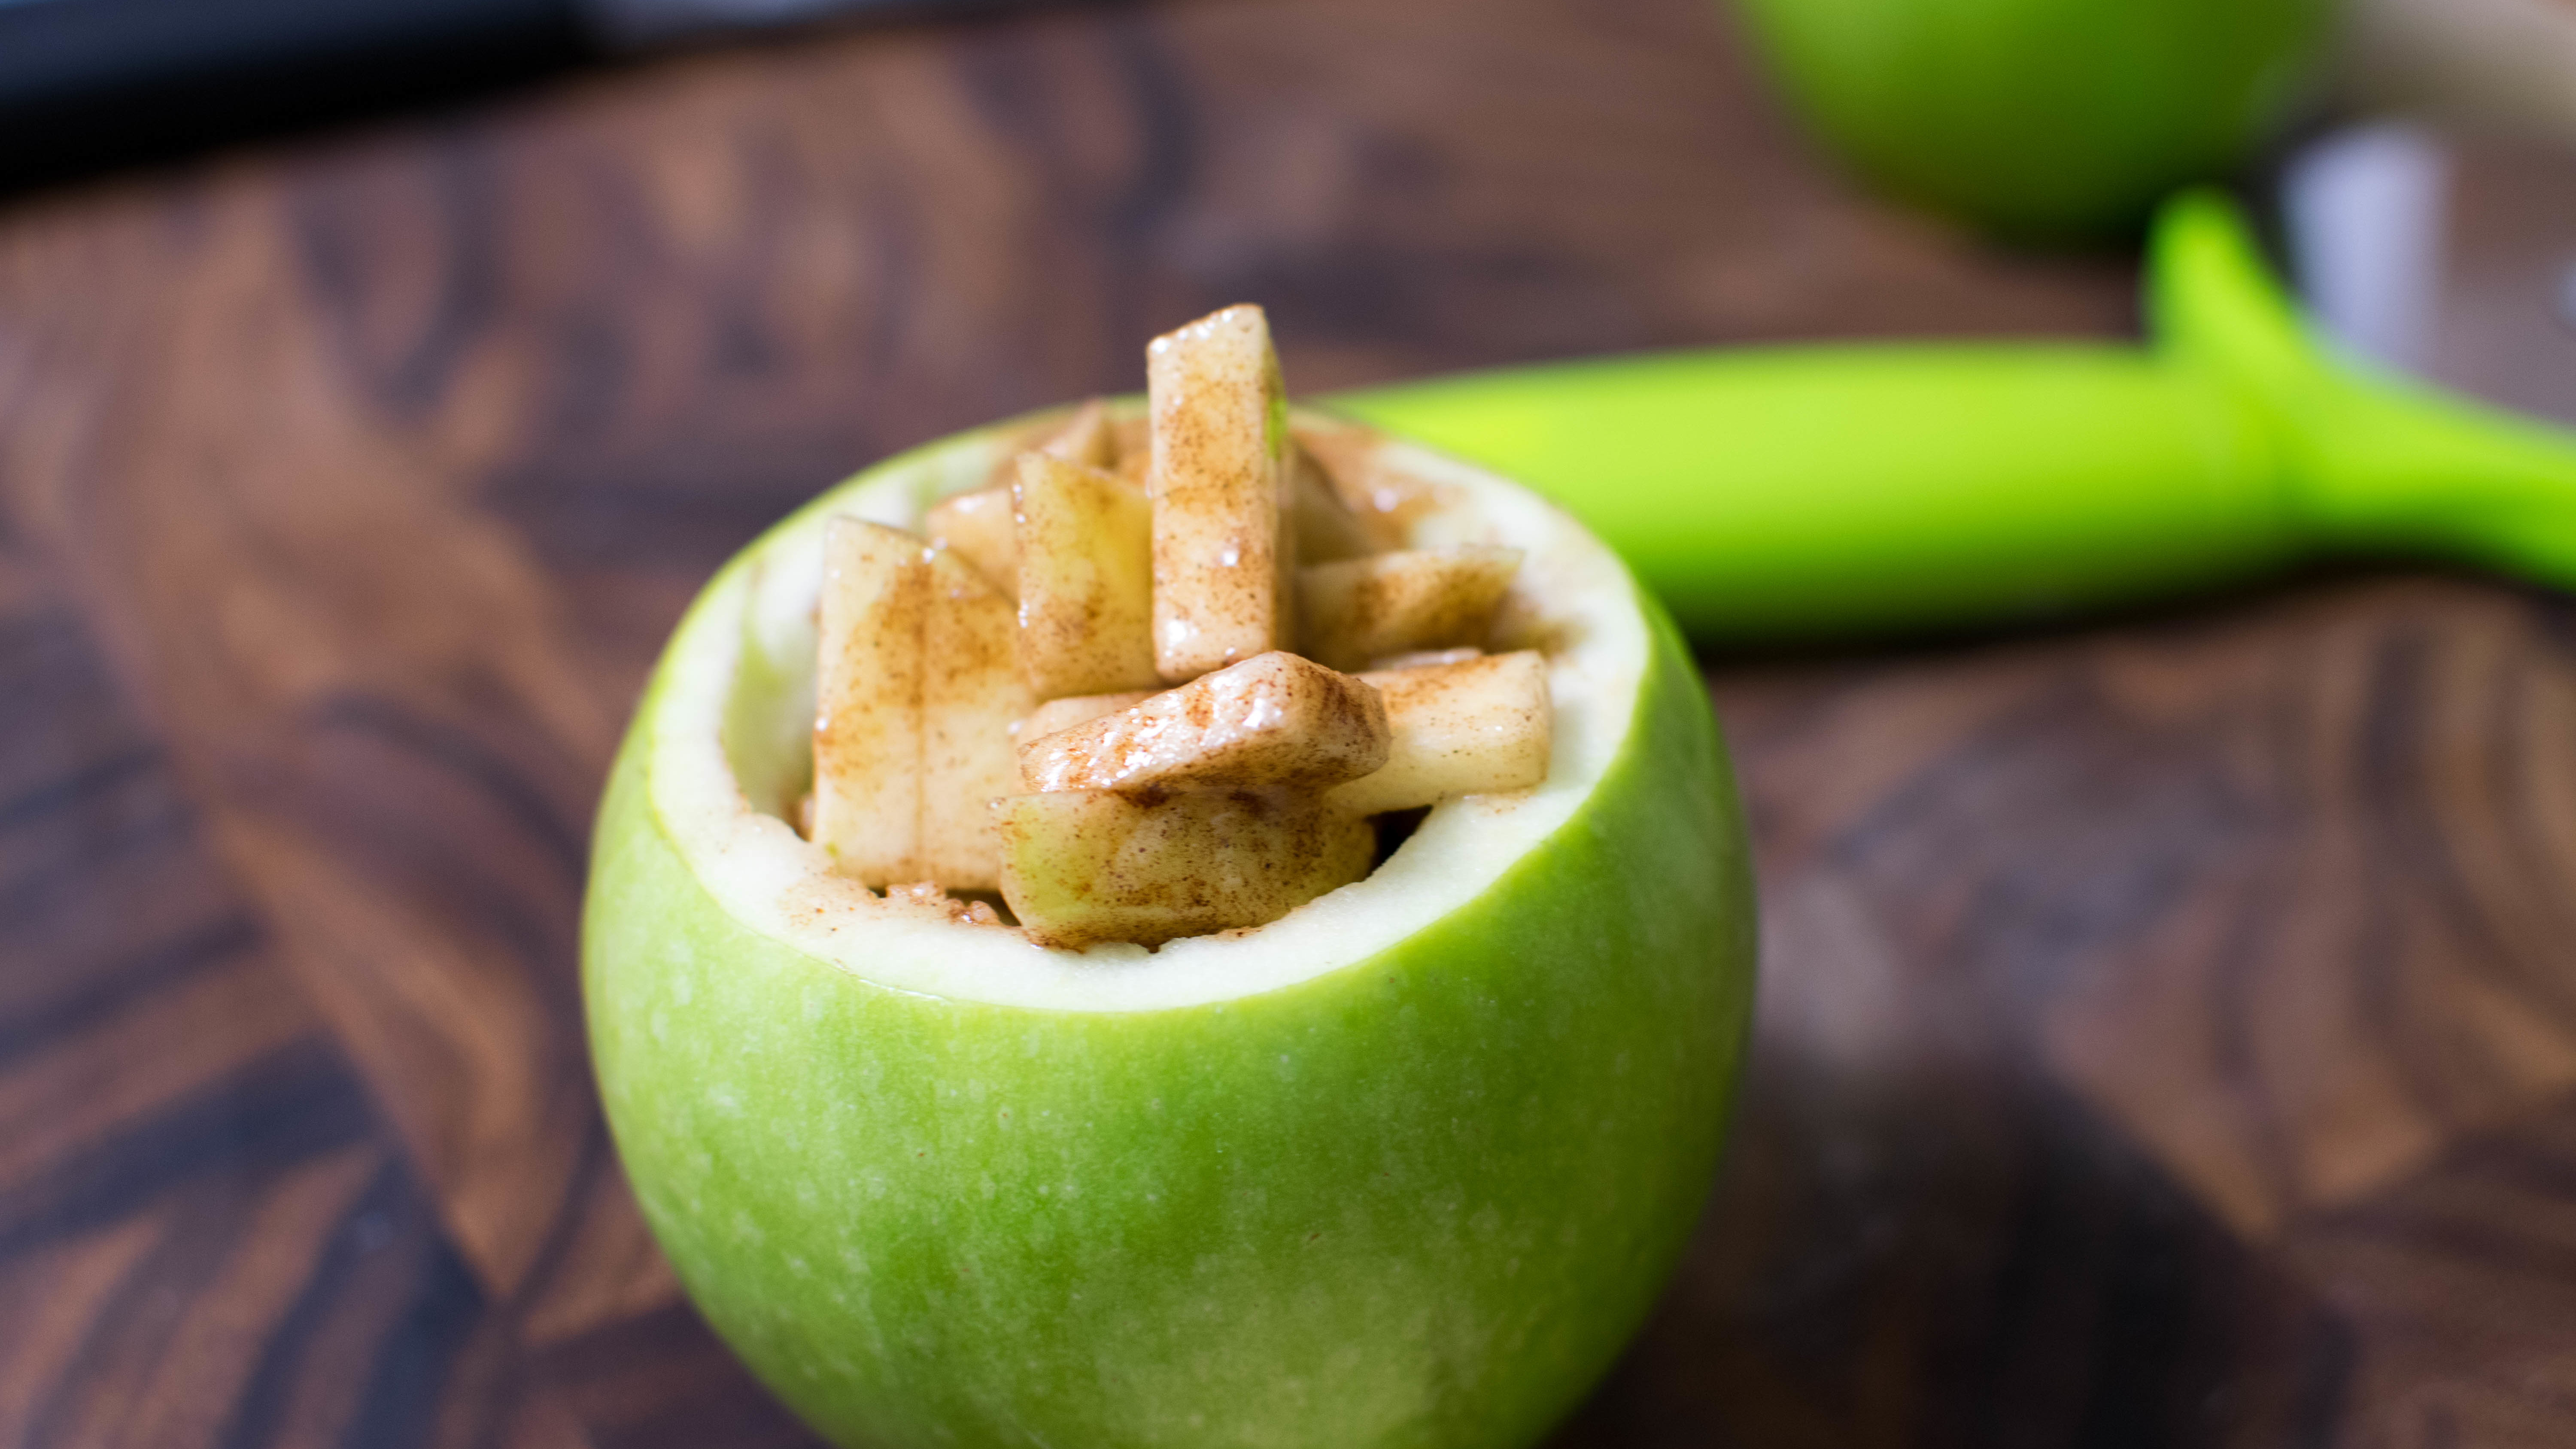 How To Make A Mini Apple Pie Inside An Apple